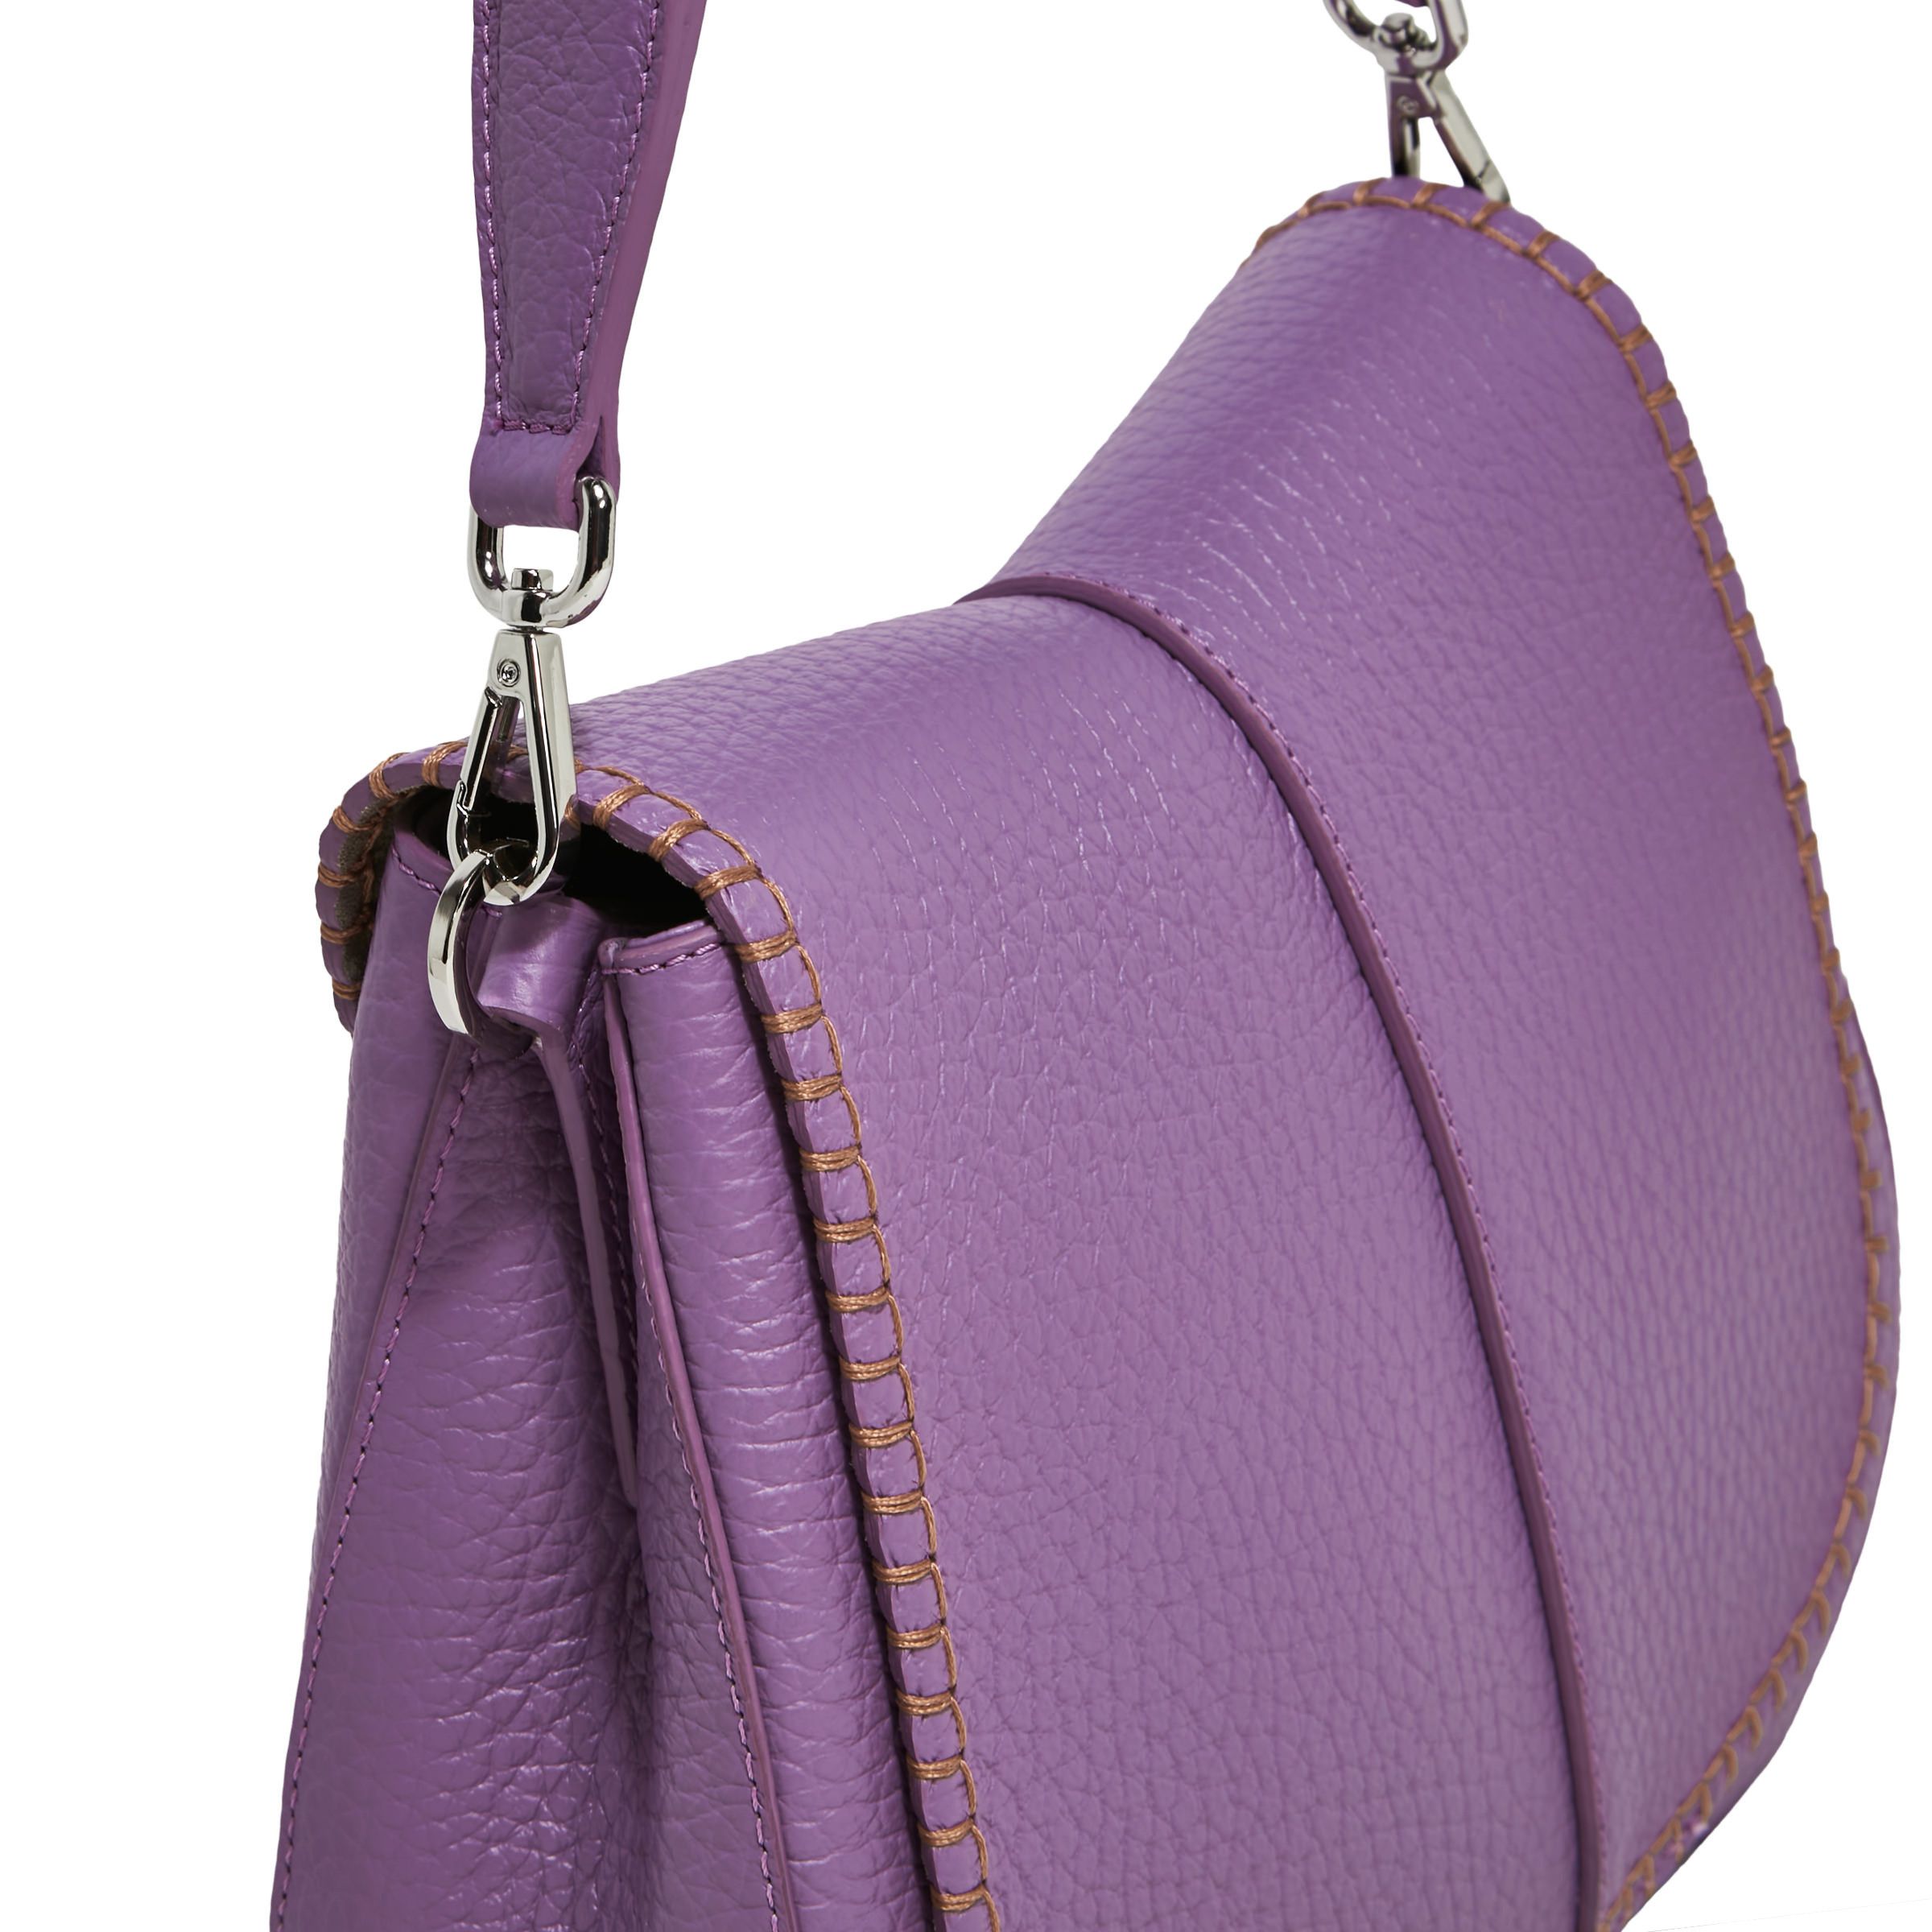 Gianni Chiarini - Helena Round bag in leather, Purple Wisteria, large image number 3